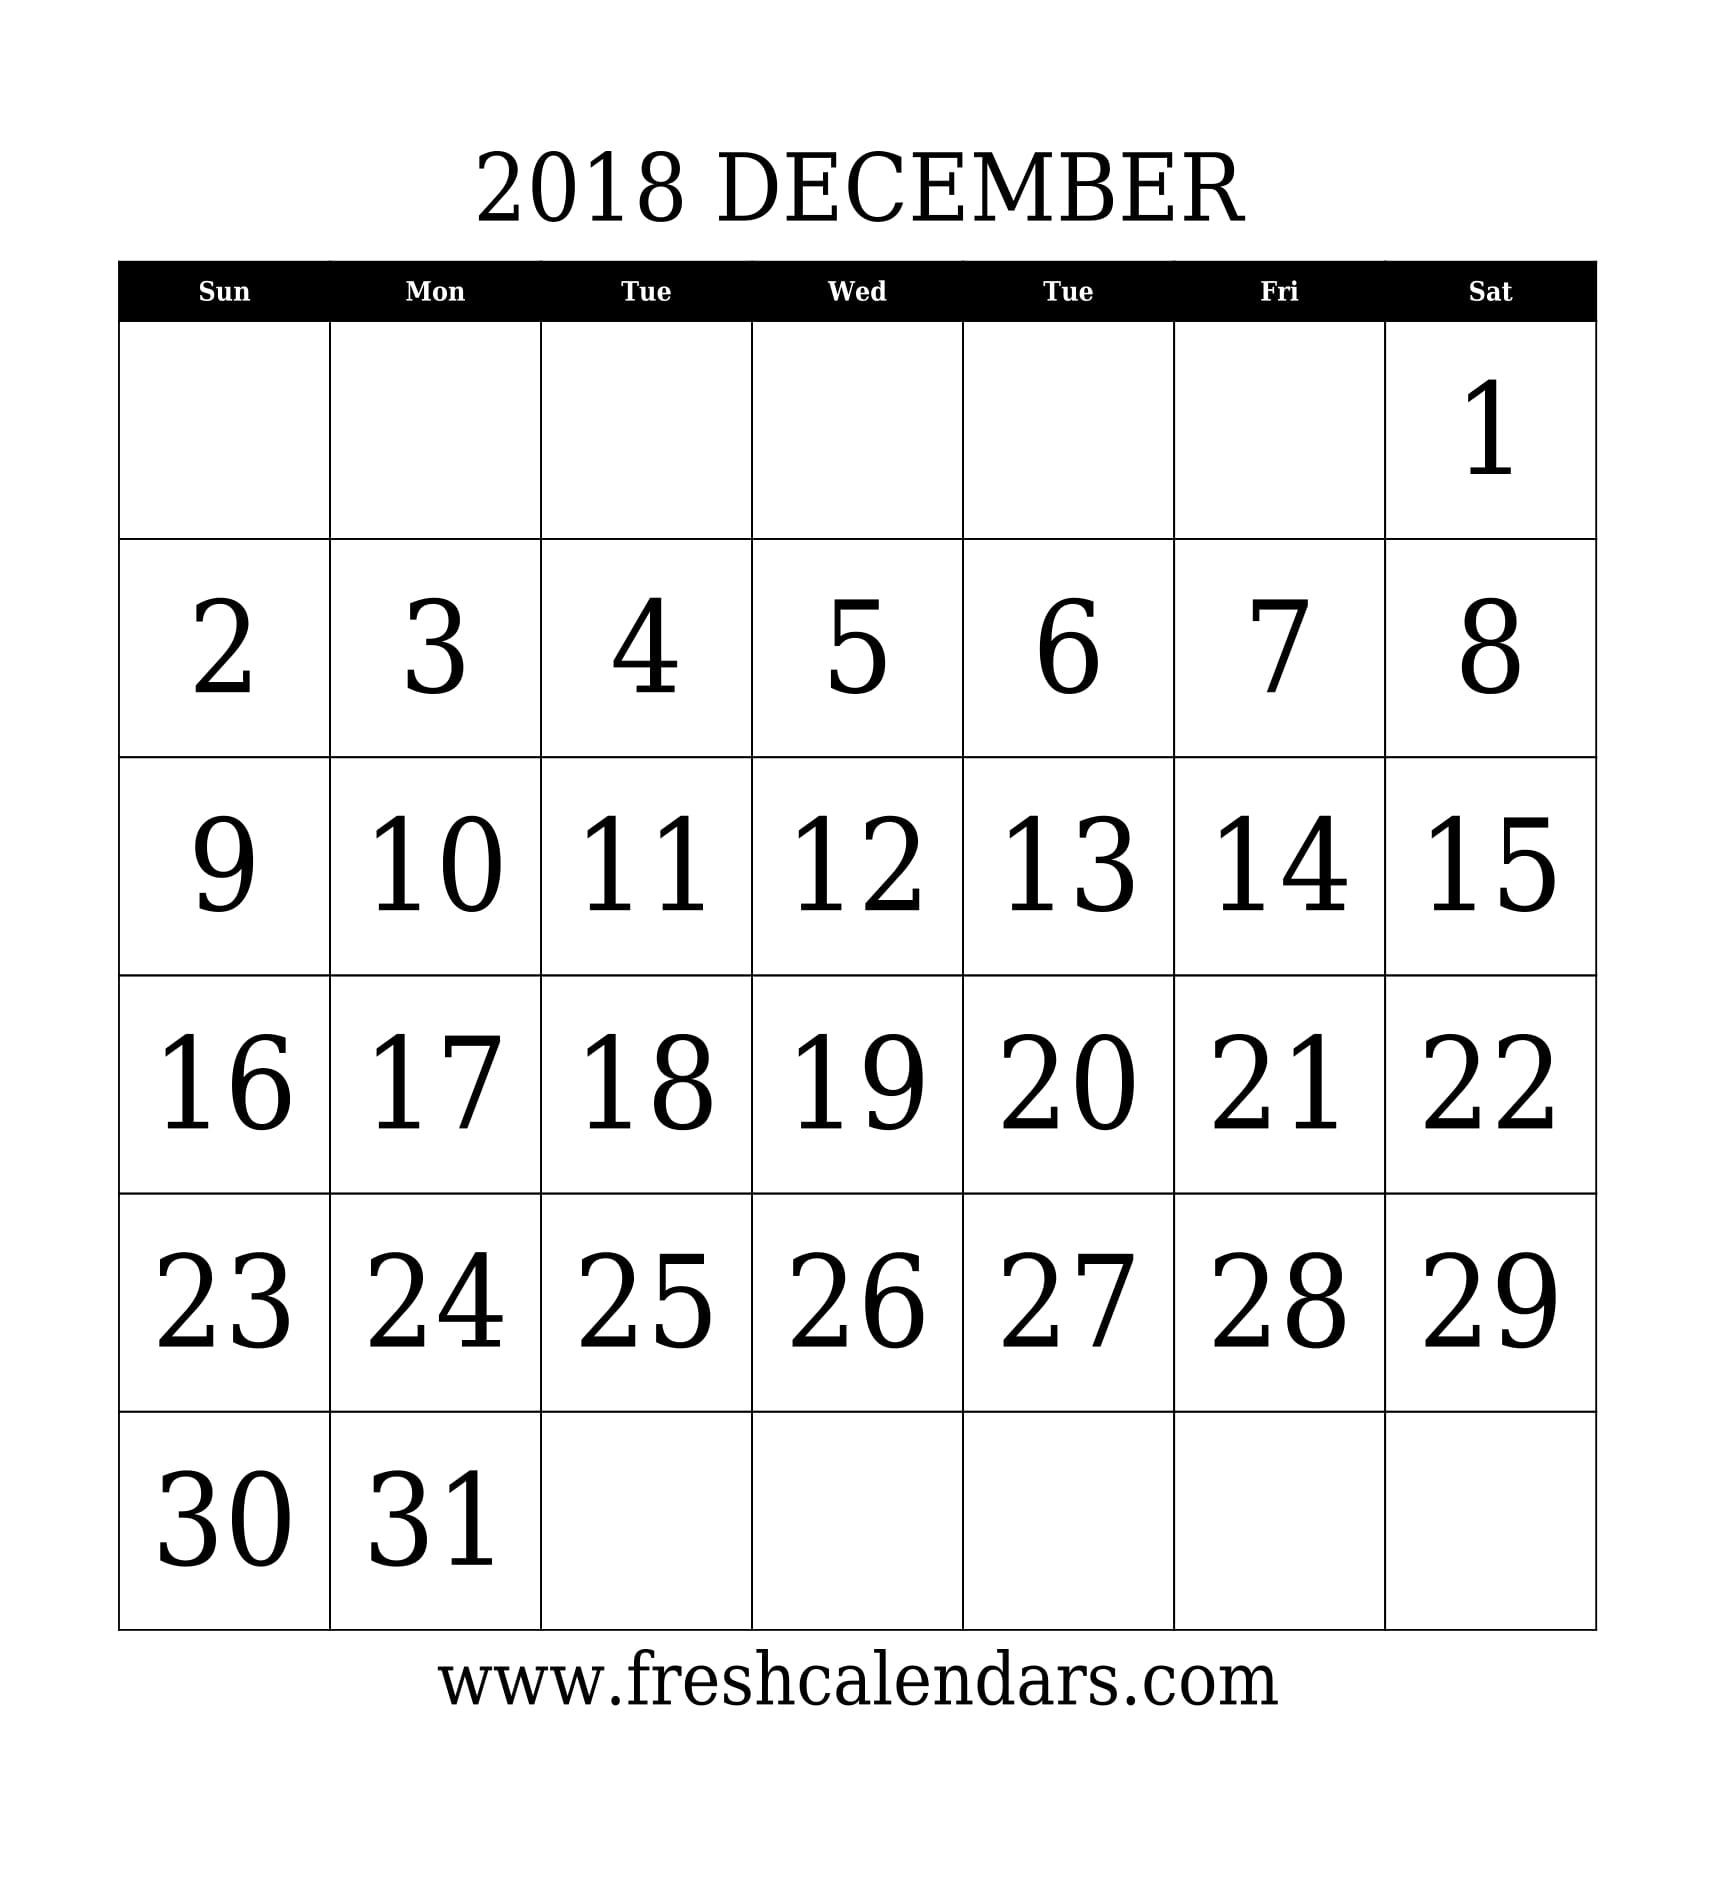 December 2018 Calendar With Large Dates